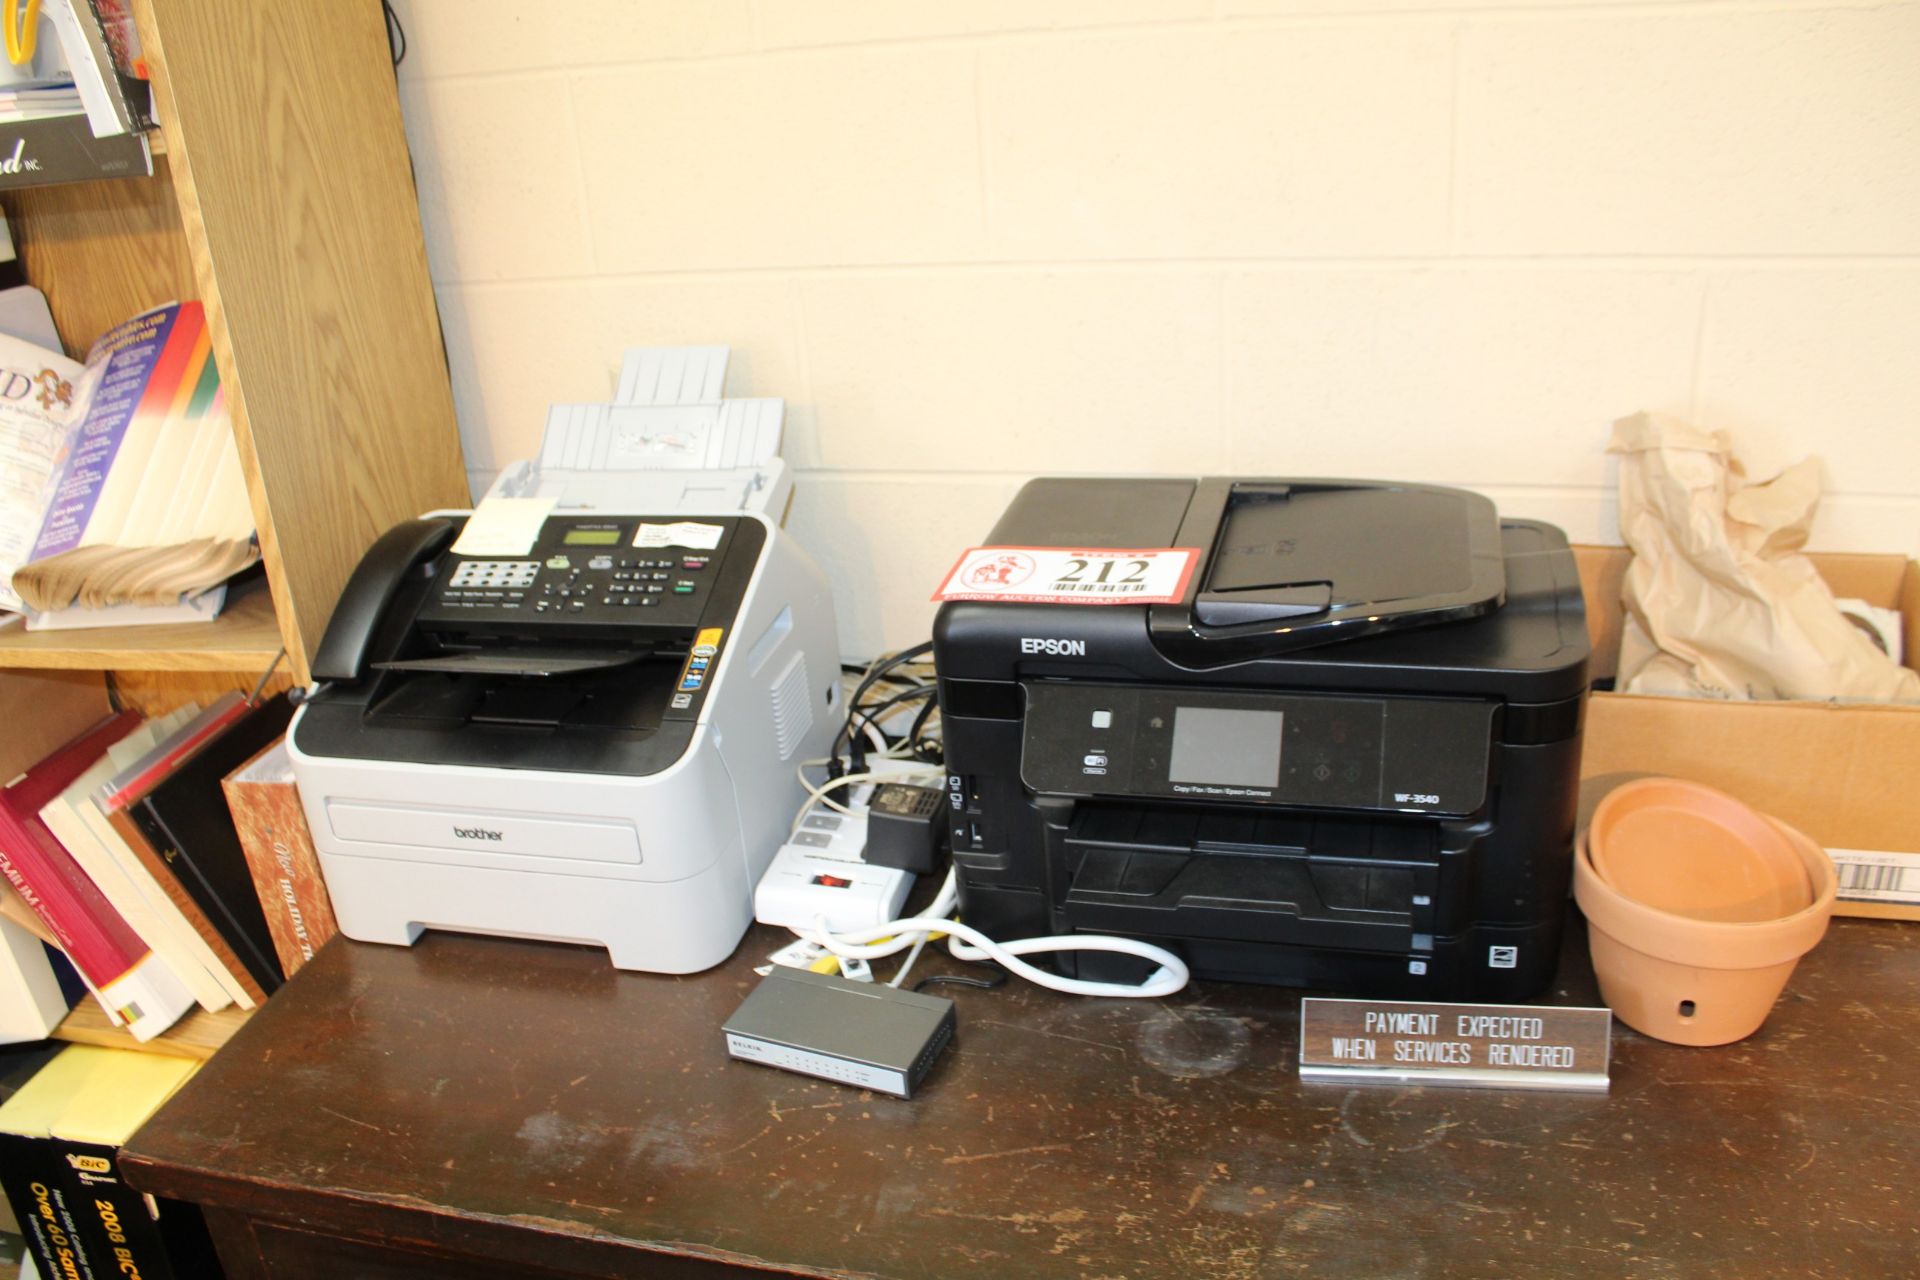 Epson Desktop Copier/ Printer and (2) Brother Fax Machines